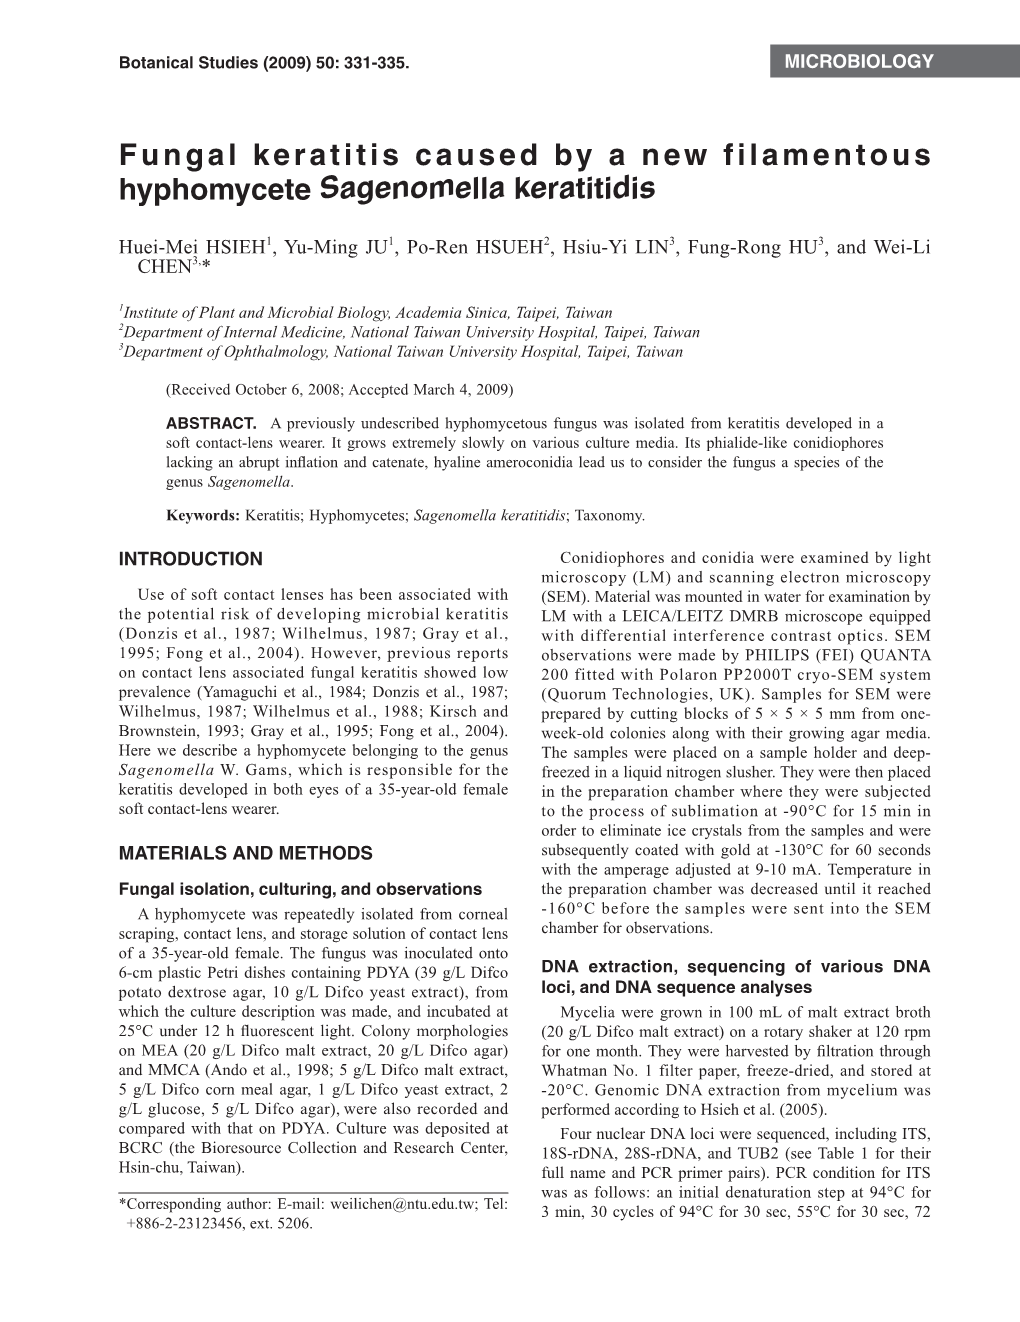 Fungal Keratitis Caused by a New Filamentous Hyphomycete Sagenomella Keratitidis